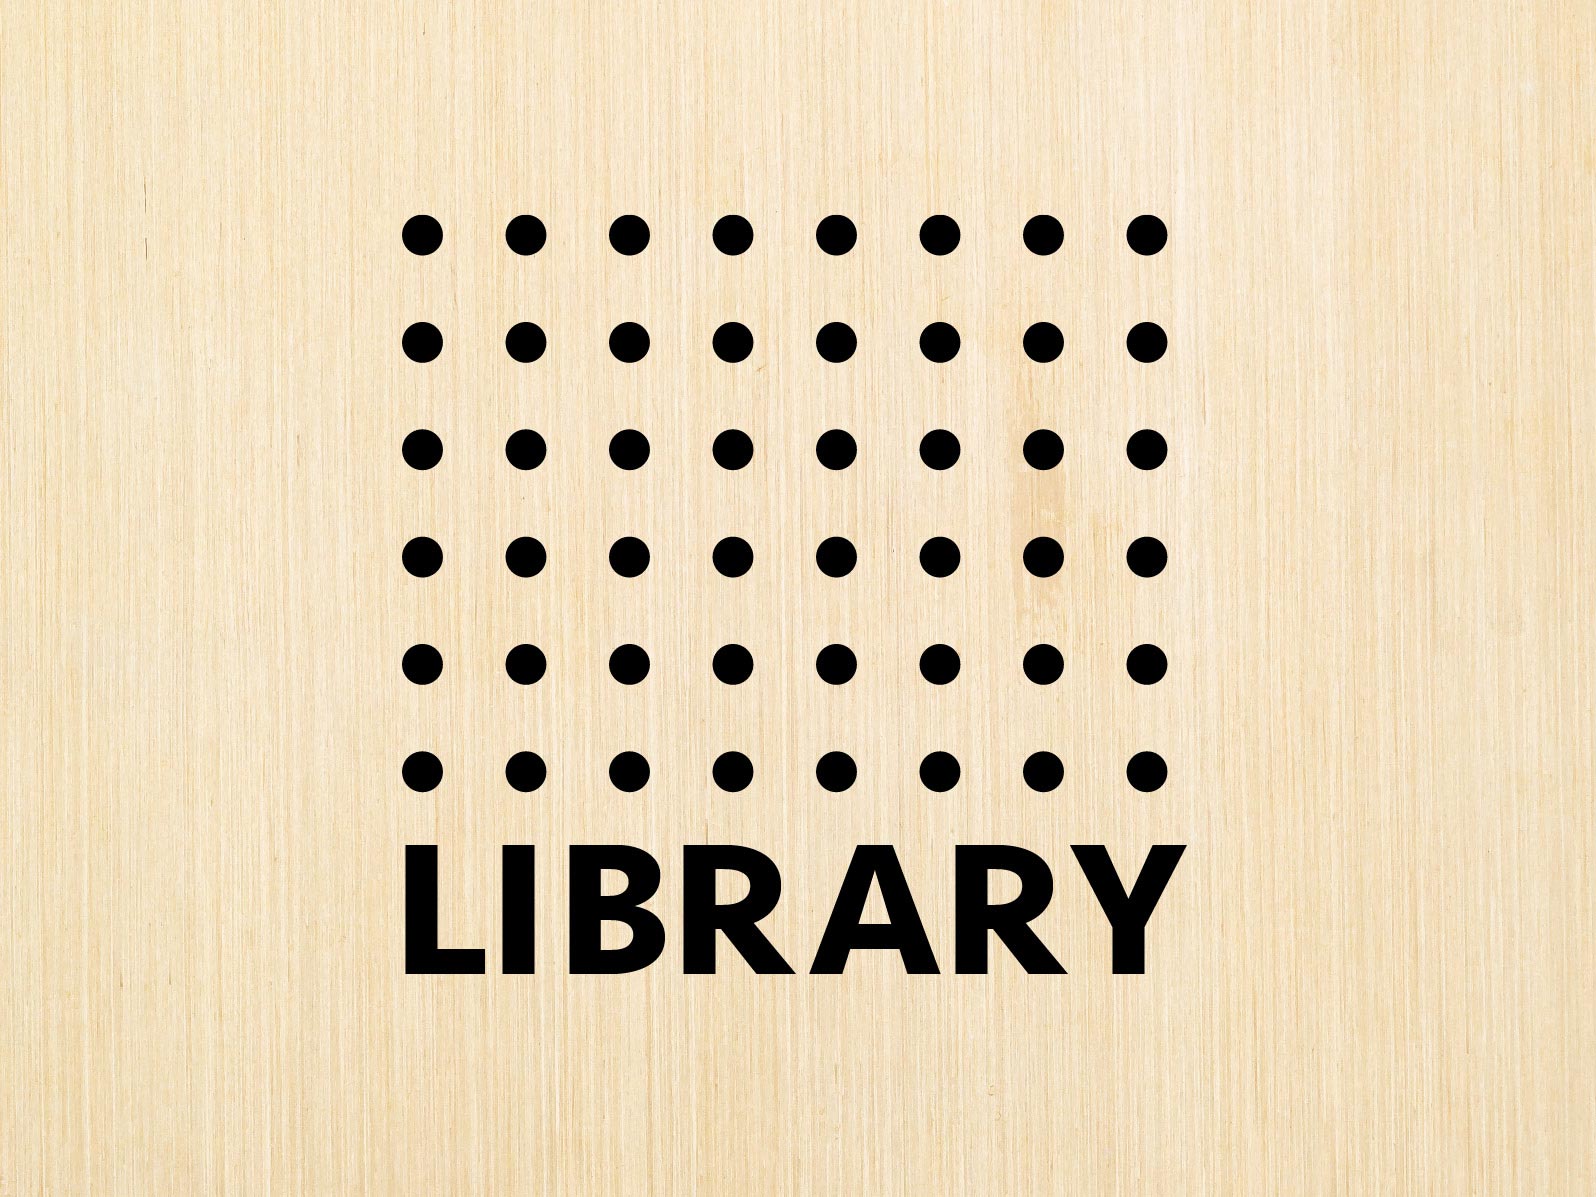 sarah-fruehwirt-library-shelves-01